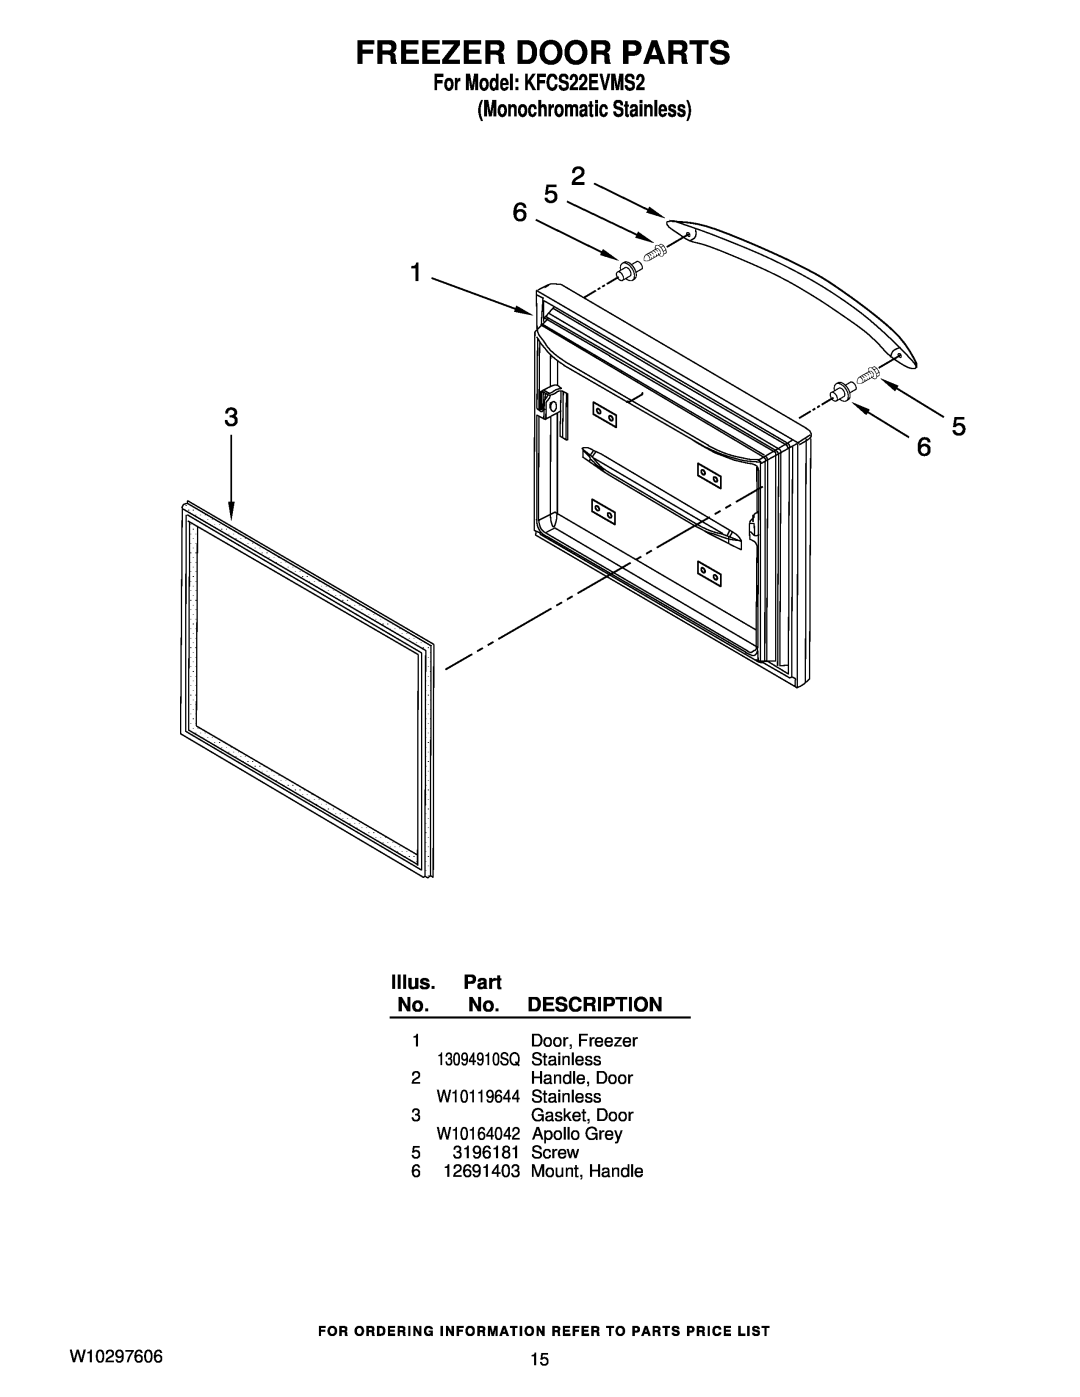 KitchenAid manual Freezer Door Parts, Illus, Description, For Model KFCS22EVMS2 Monochromatic Stainless 